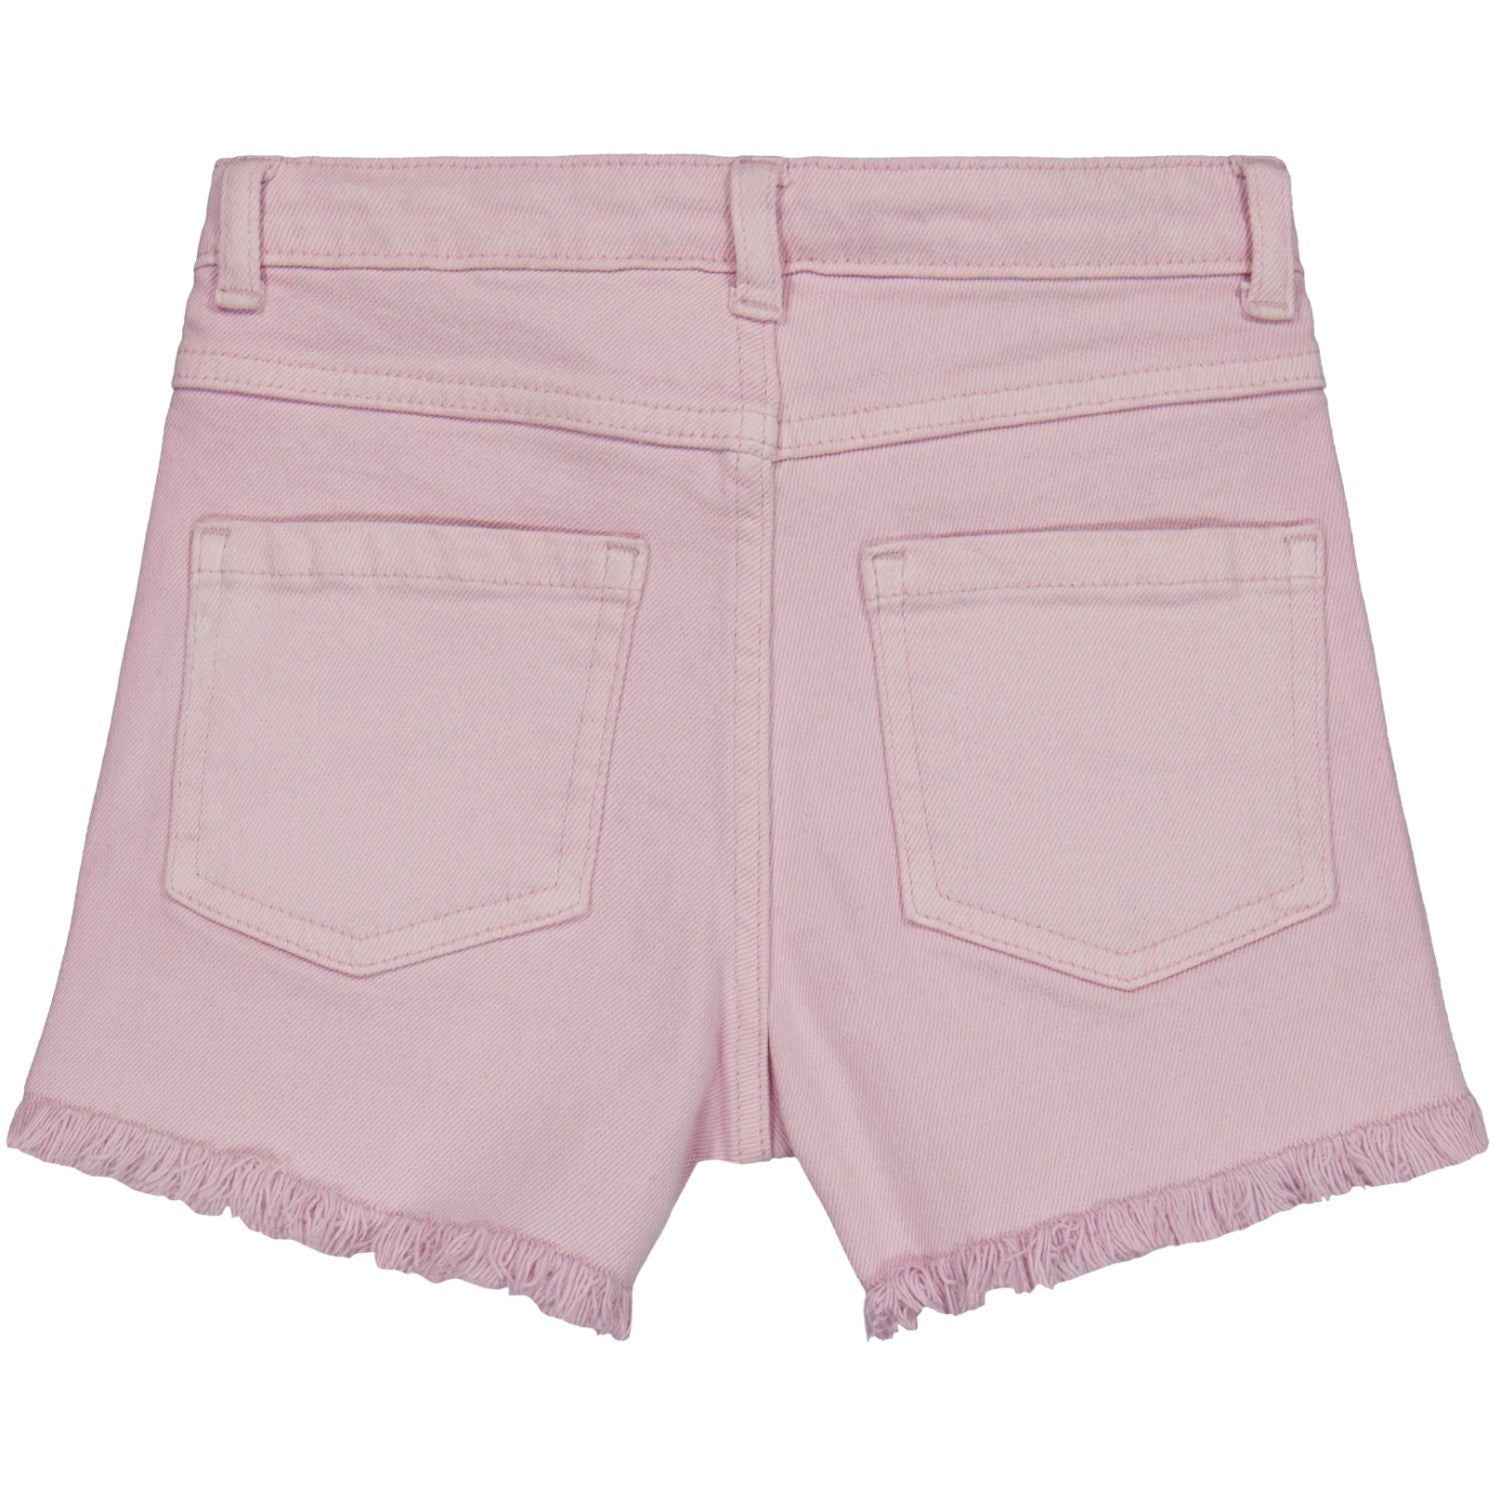 The New Pink Nectar Agnes Denim Shorts 2